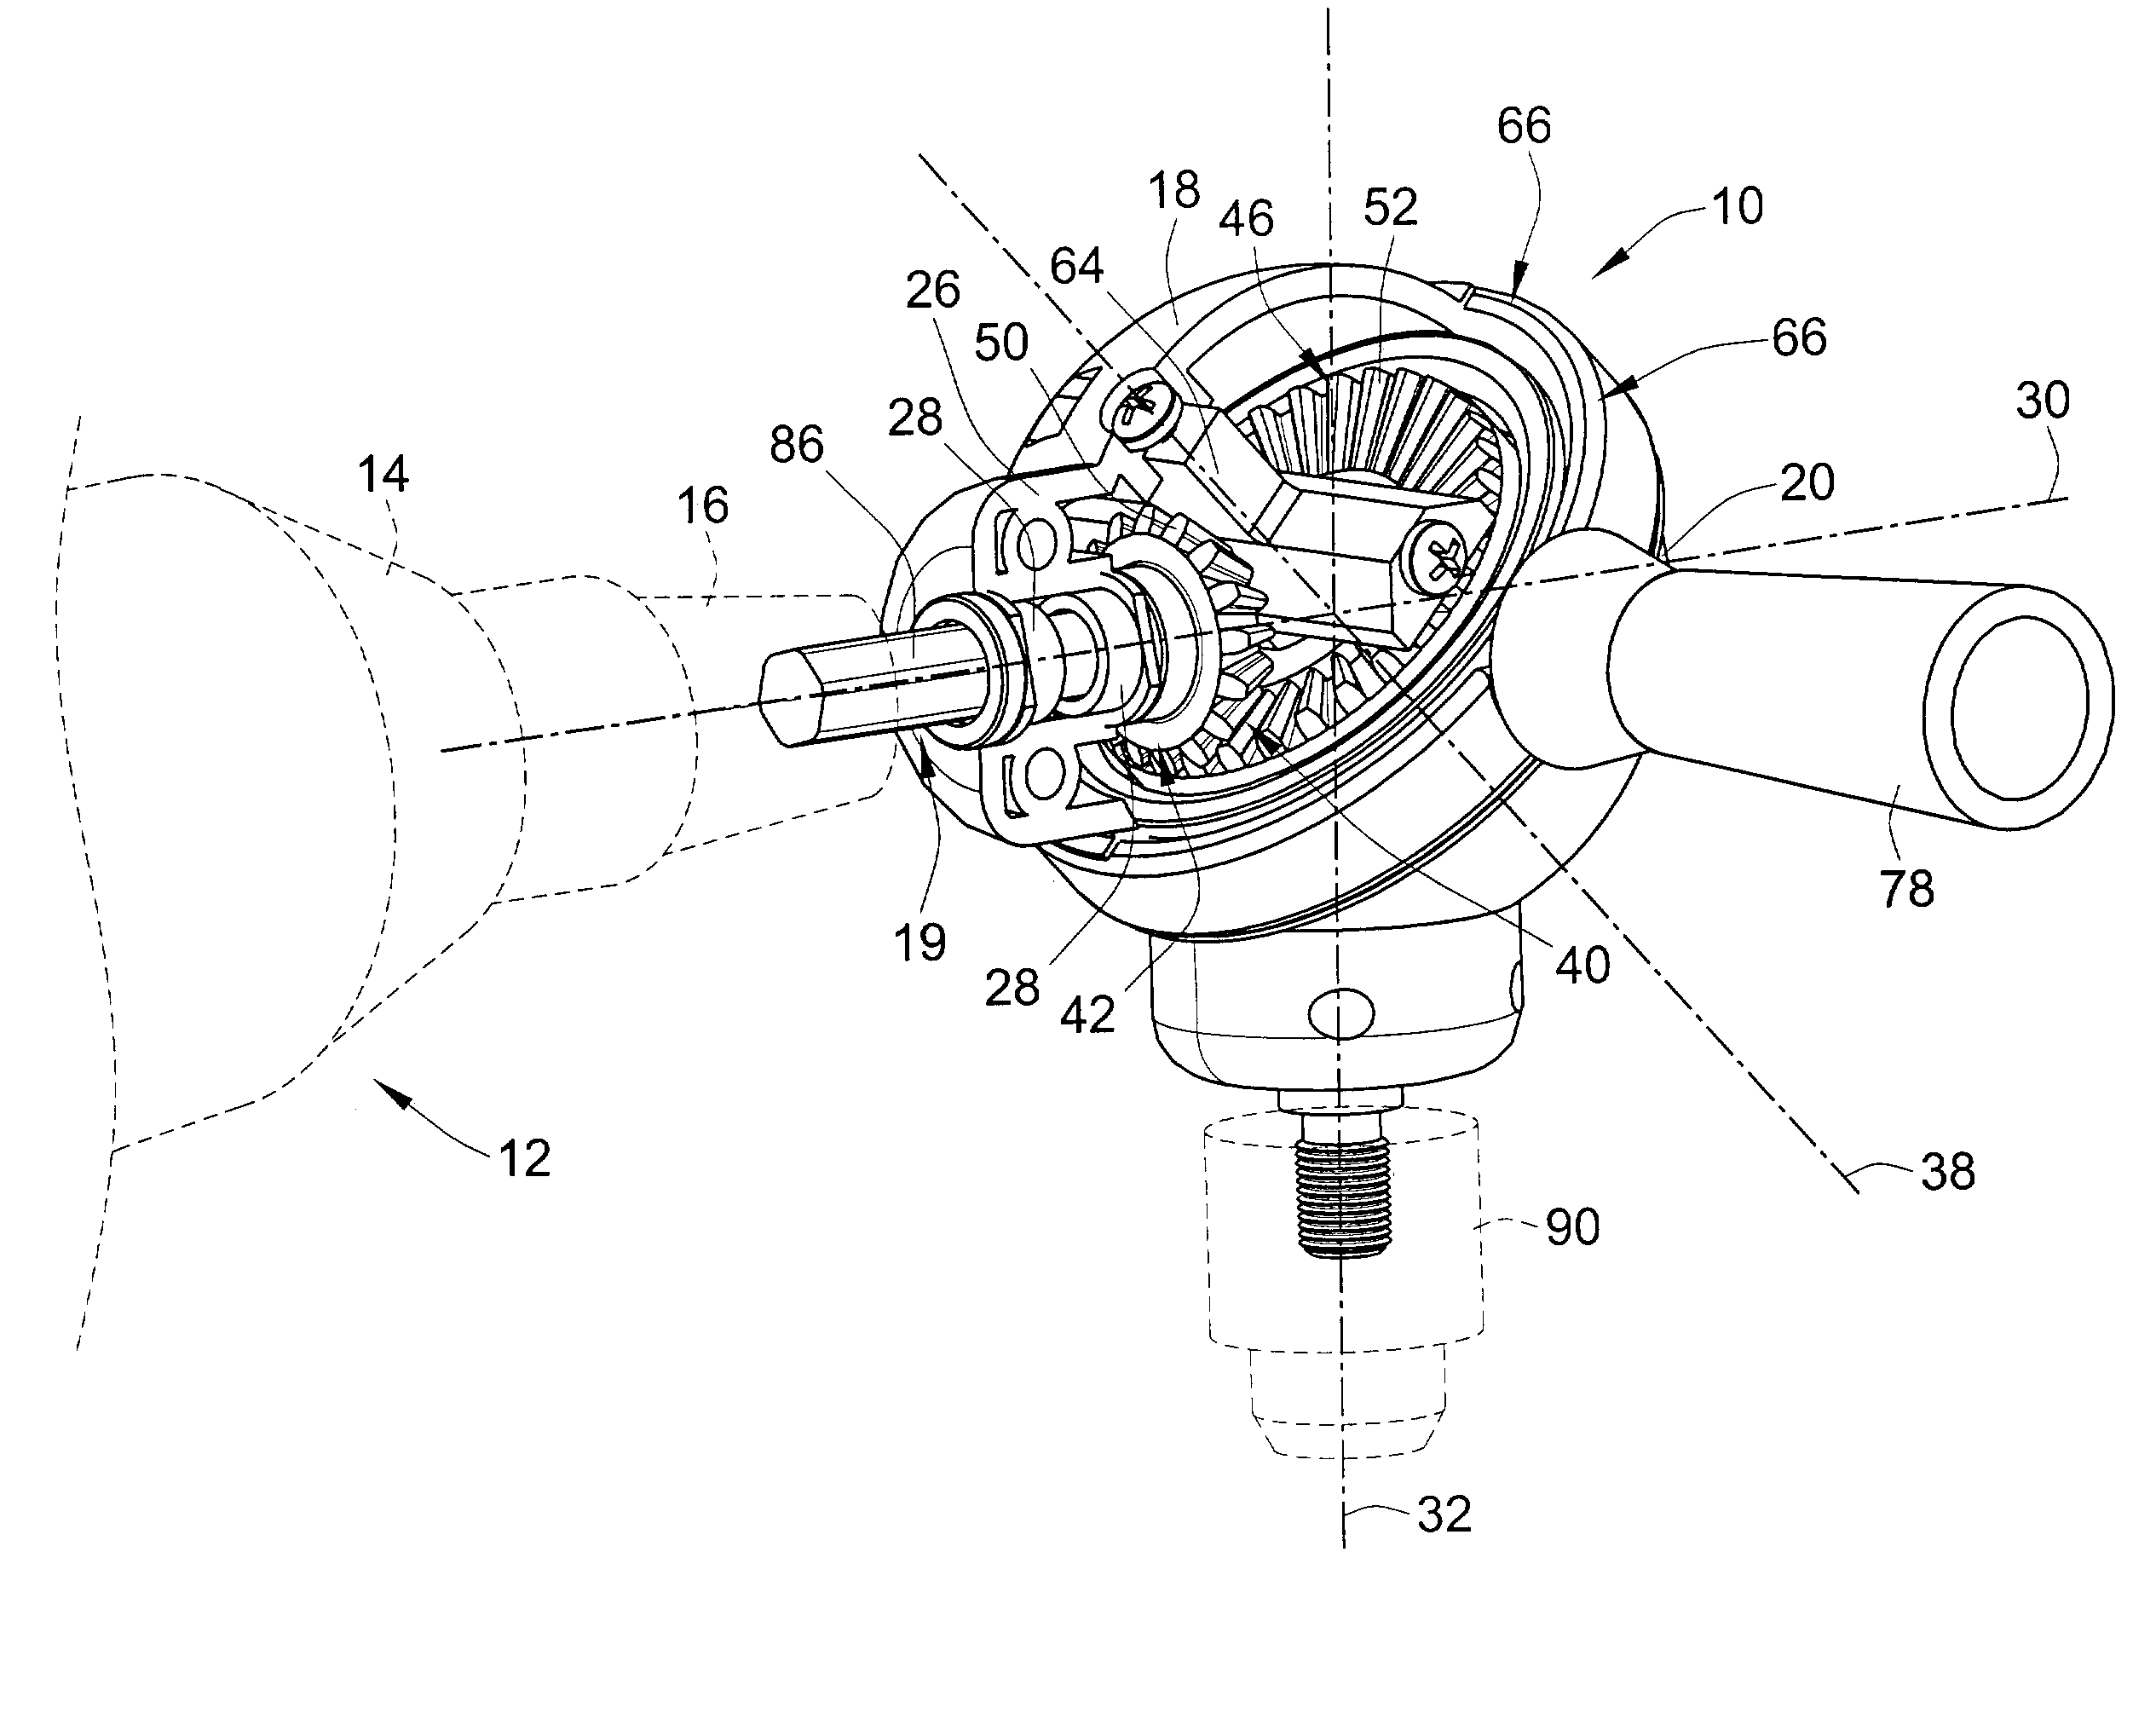 Adjustable angle drive for a rotary power tool